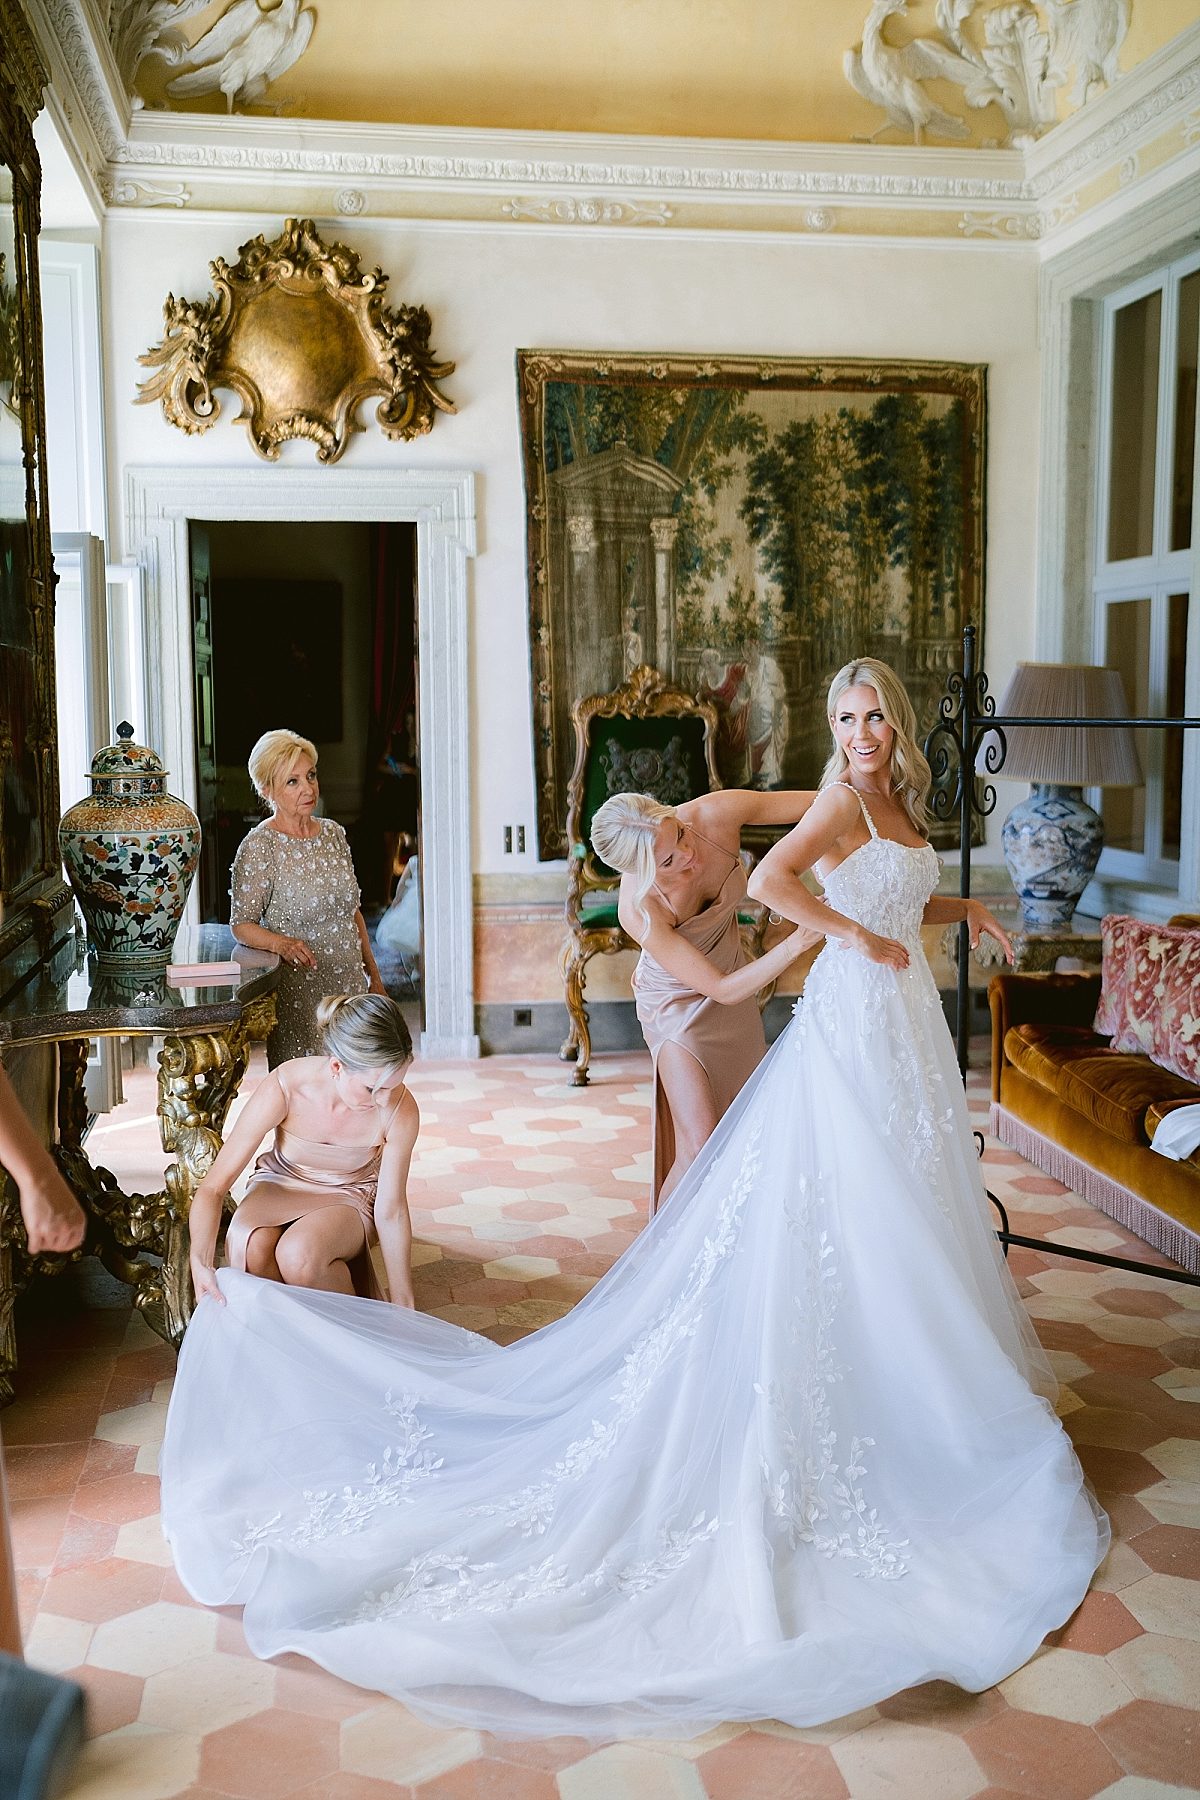 Villa Balbiano Lake como
Luxury wedding 
Photographer lake como 
Bride getting ready with her bridesmaids 